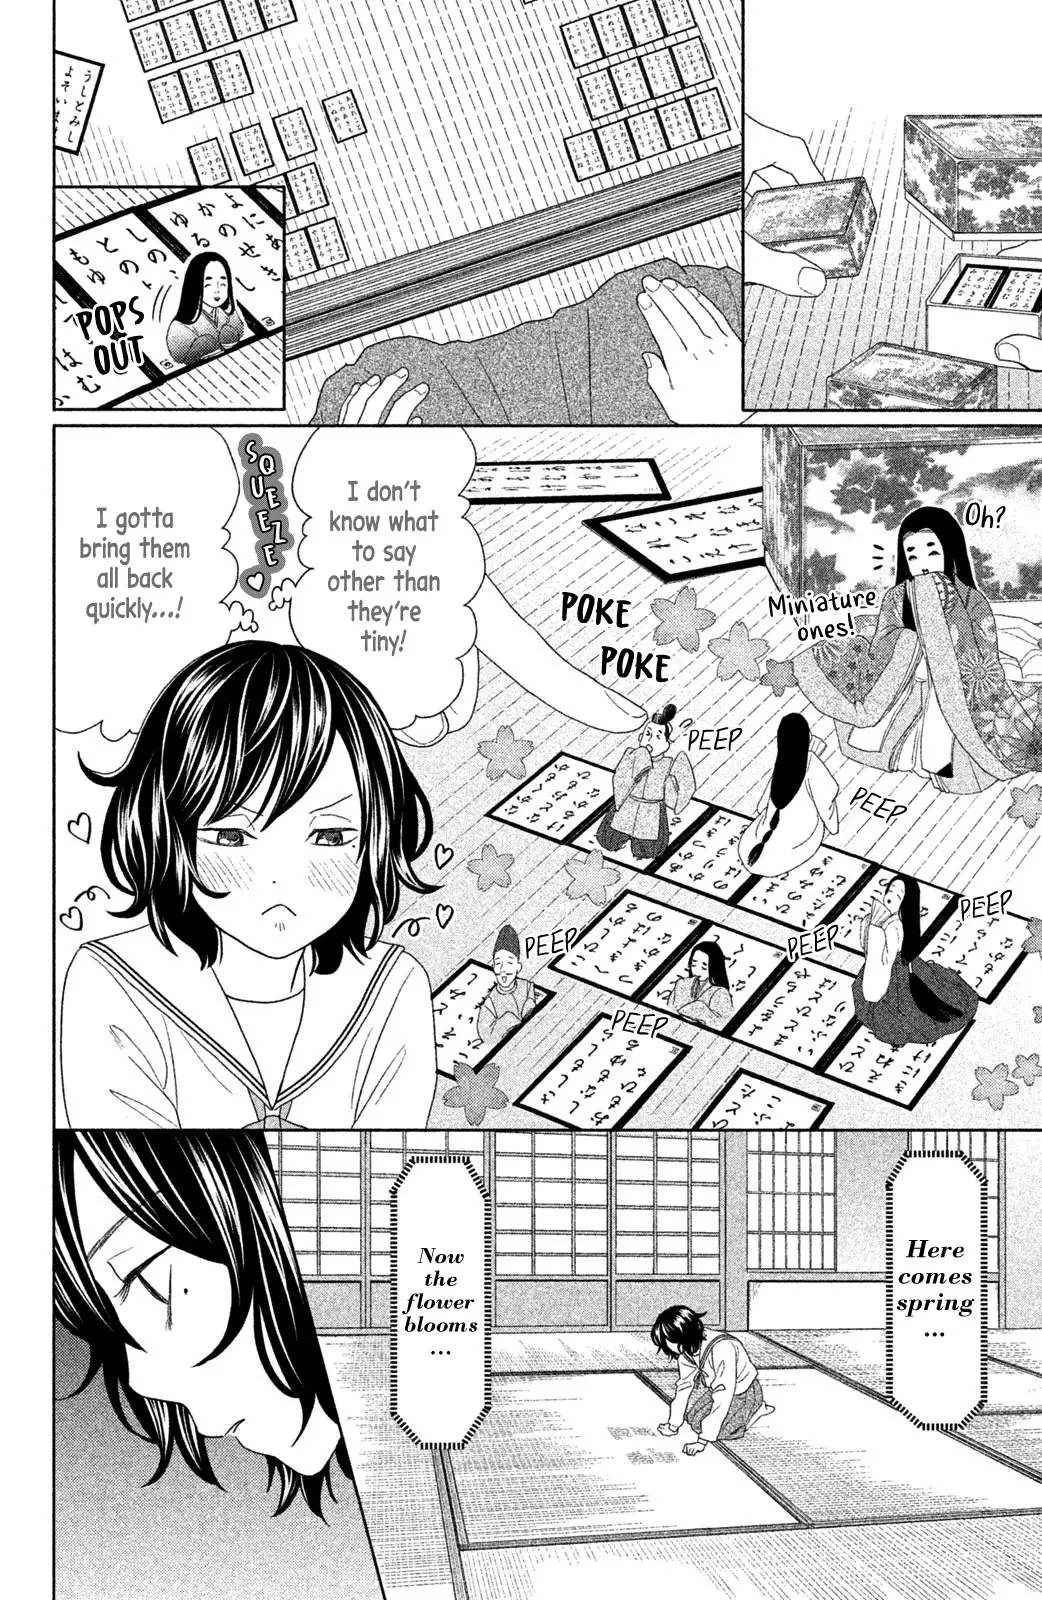 Chihayafuru: Middle School Arc - 11 page 11